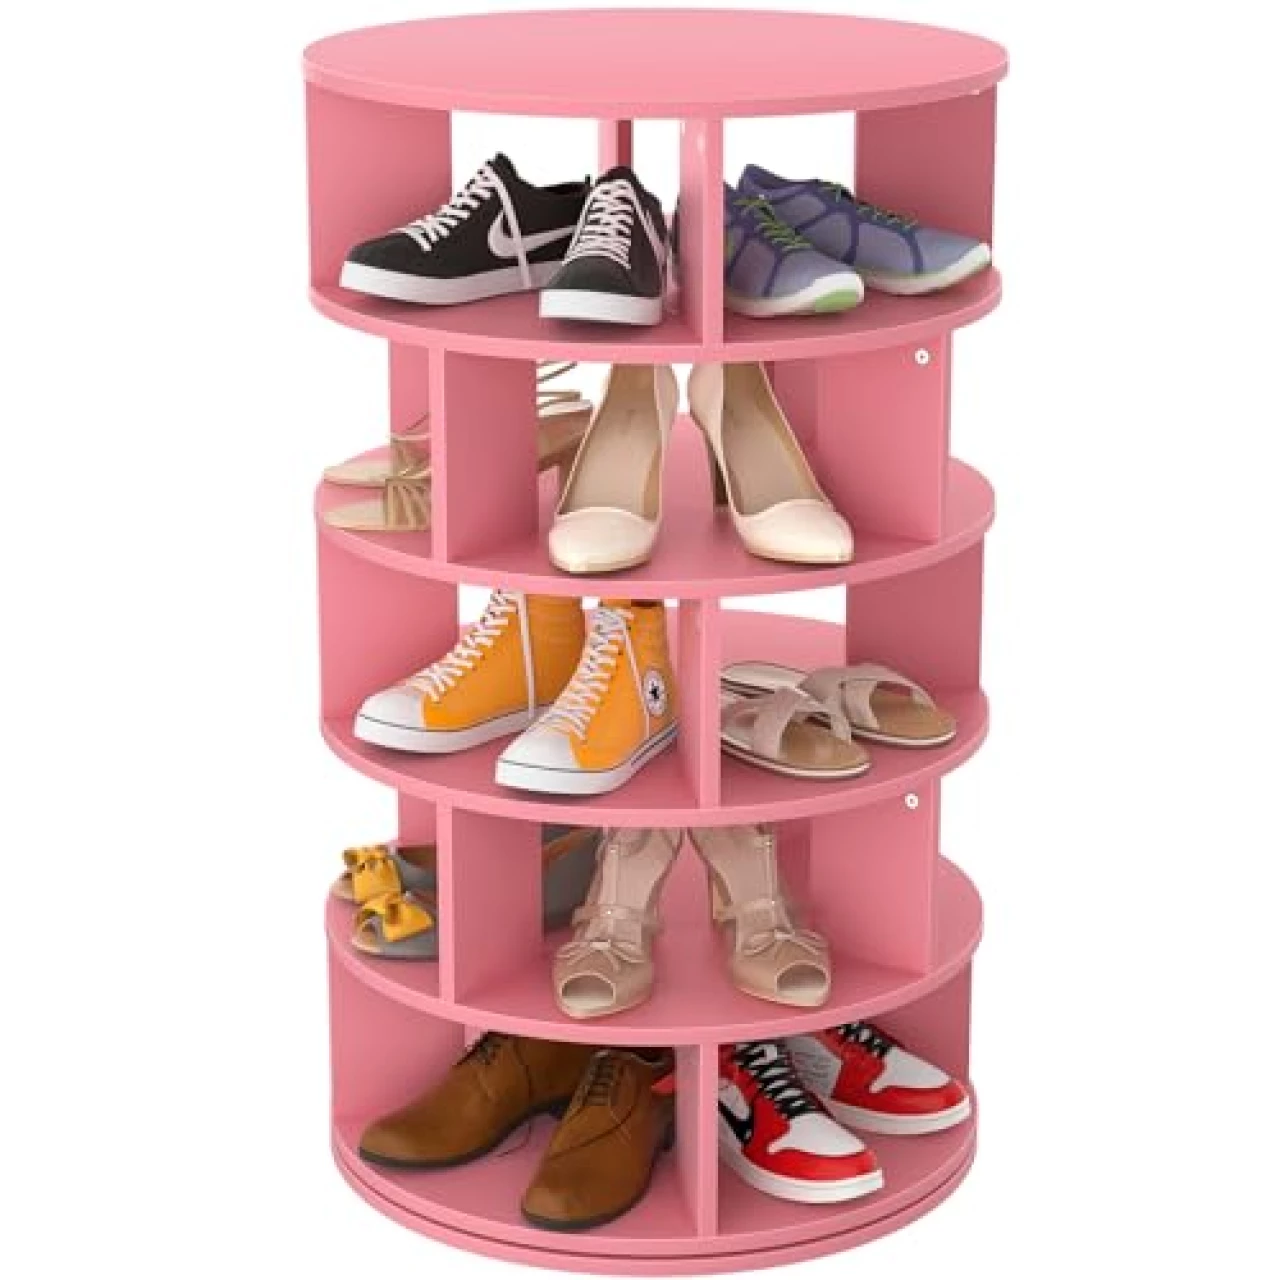 Aheaplus Rotating Shoe Rack, 5-Tier Wood Shoe Organizer for Closet, 360° Spinning Shoe Rack Tower Space-Saving Shoe Storage Shelf for Entryway, Garage, Bedroom, Pink